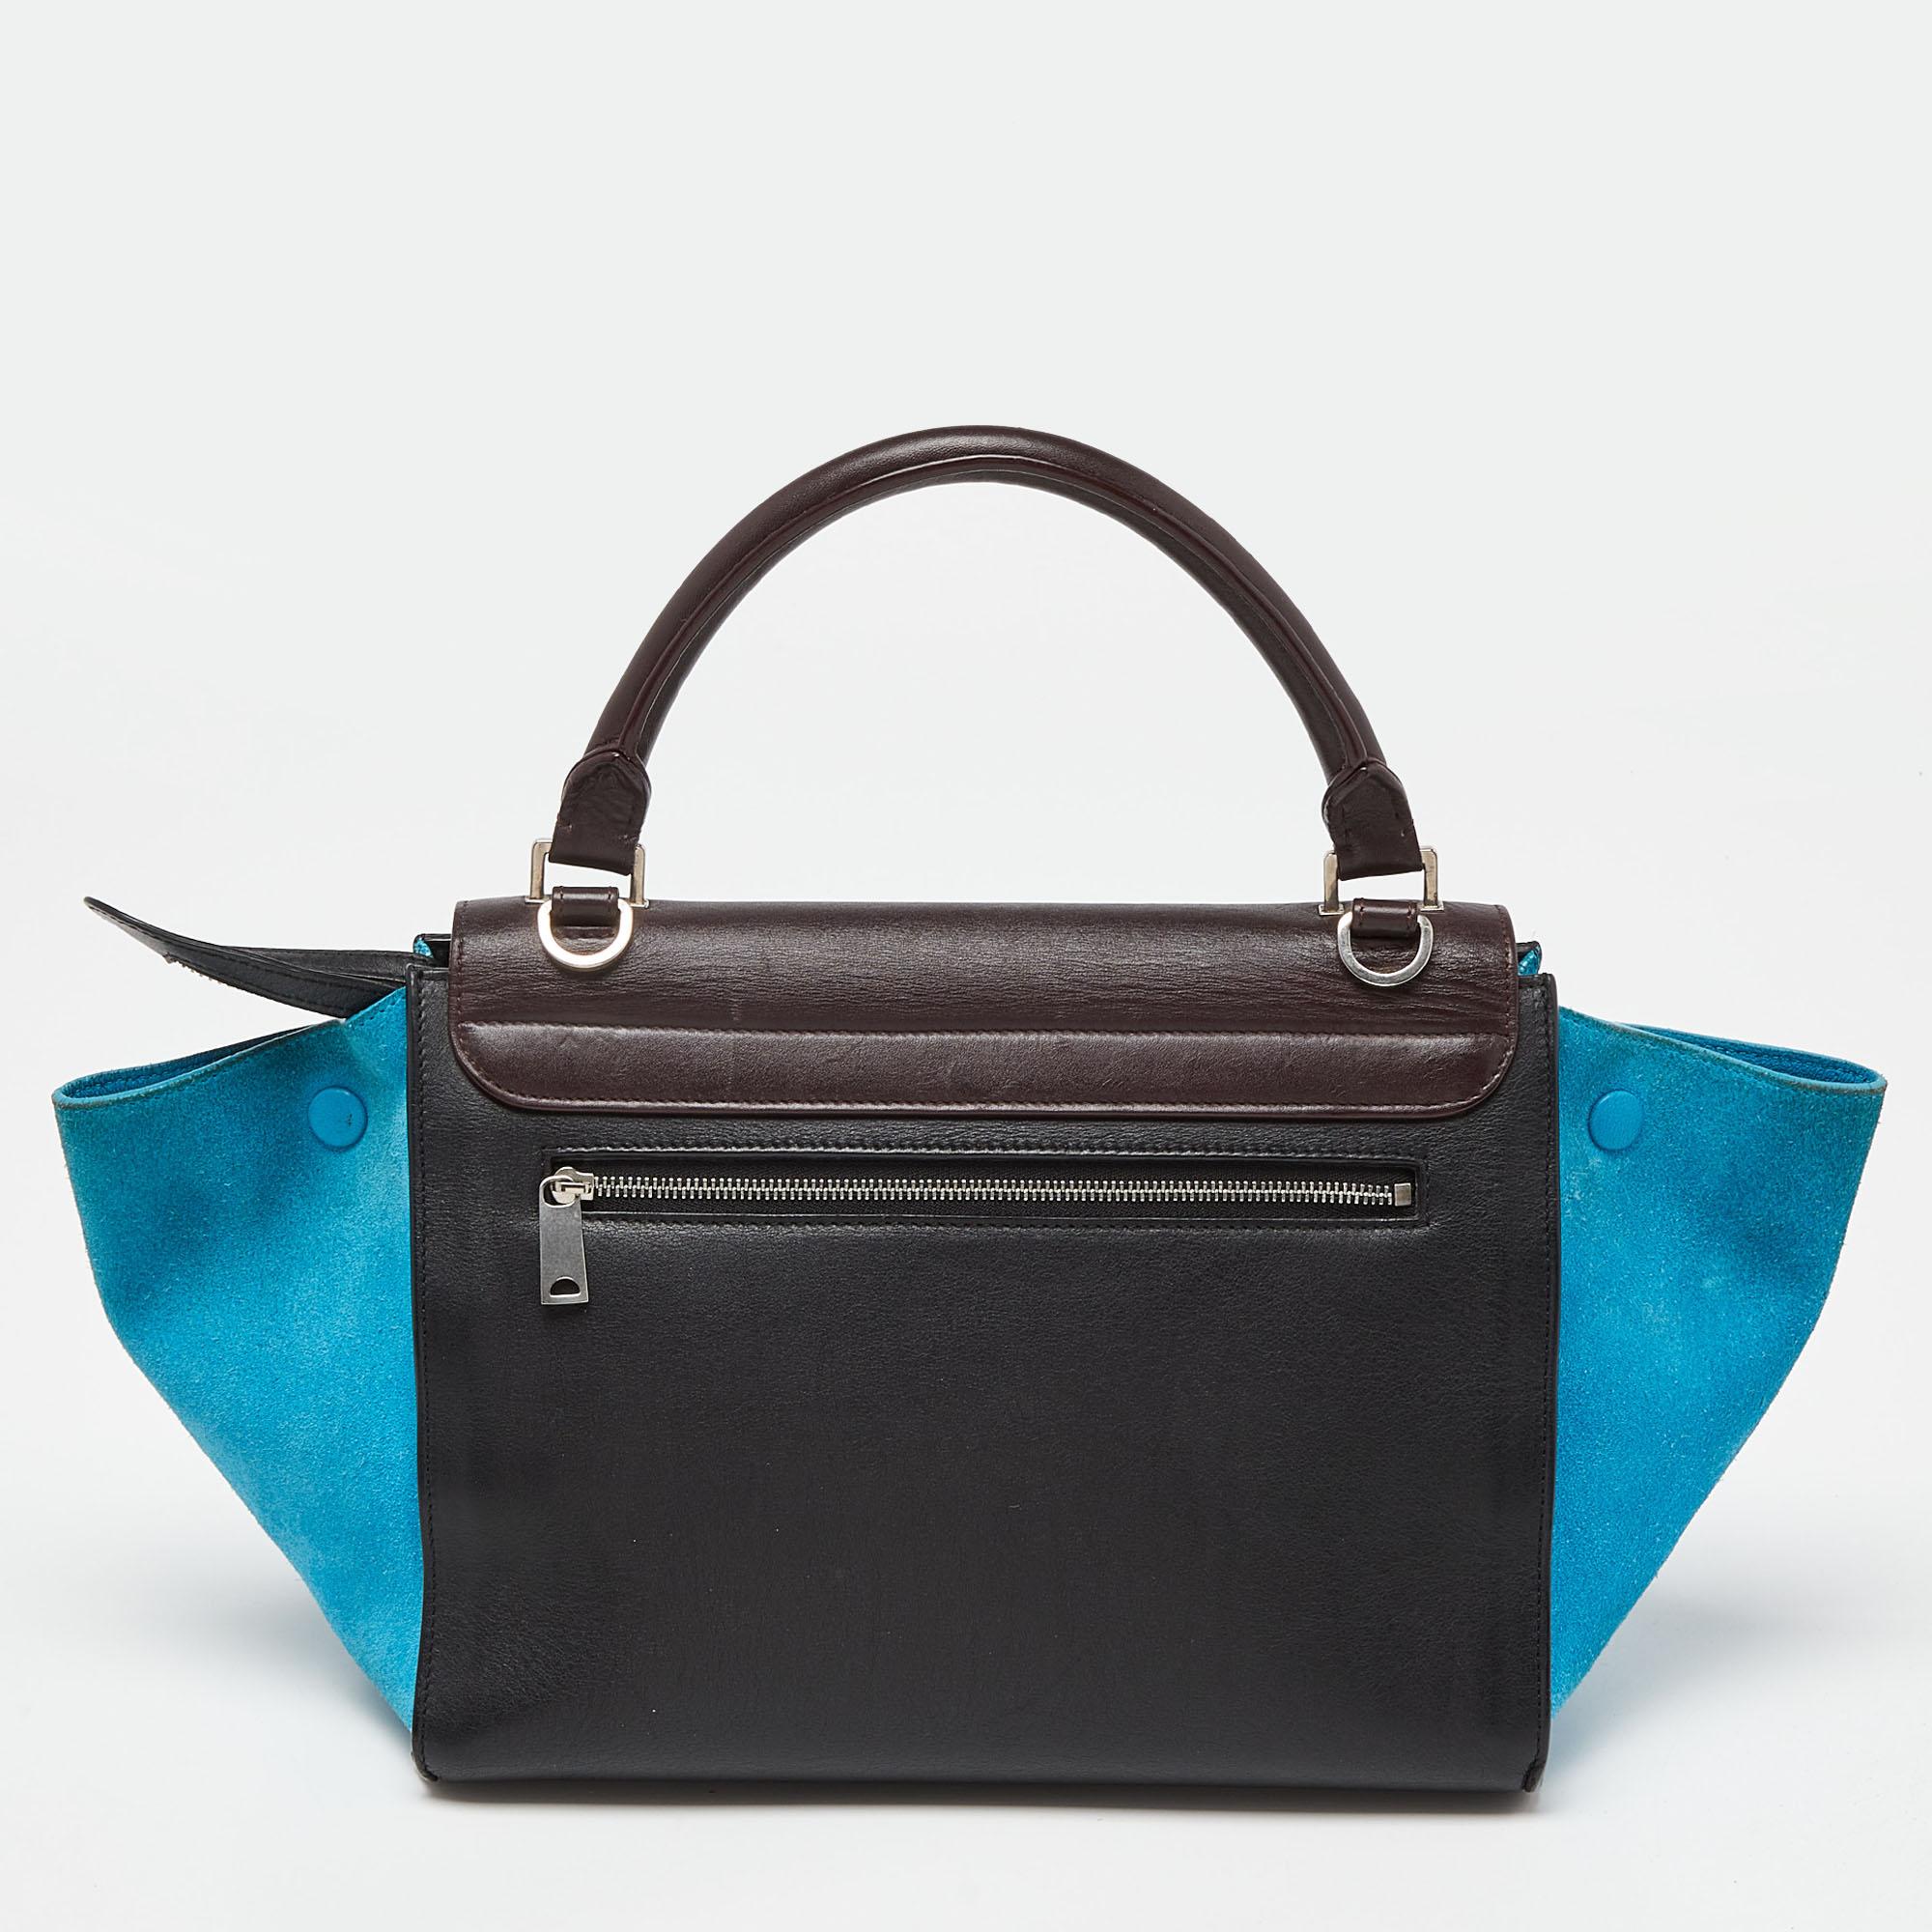 Celine Tri Color Leather and Suede Small Trapeze Top Handle Bag In Good Condition For Sale In Dubai, Al Qouz 2